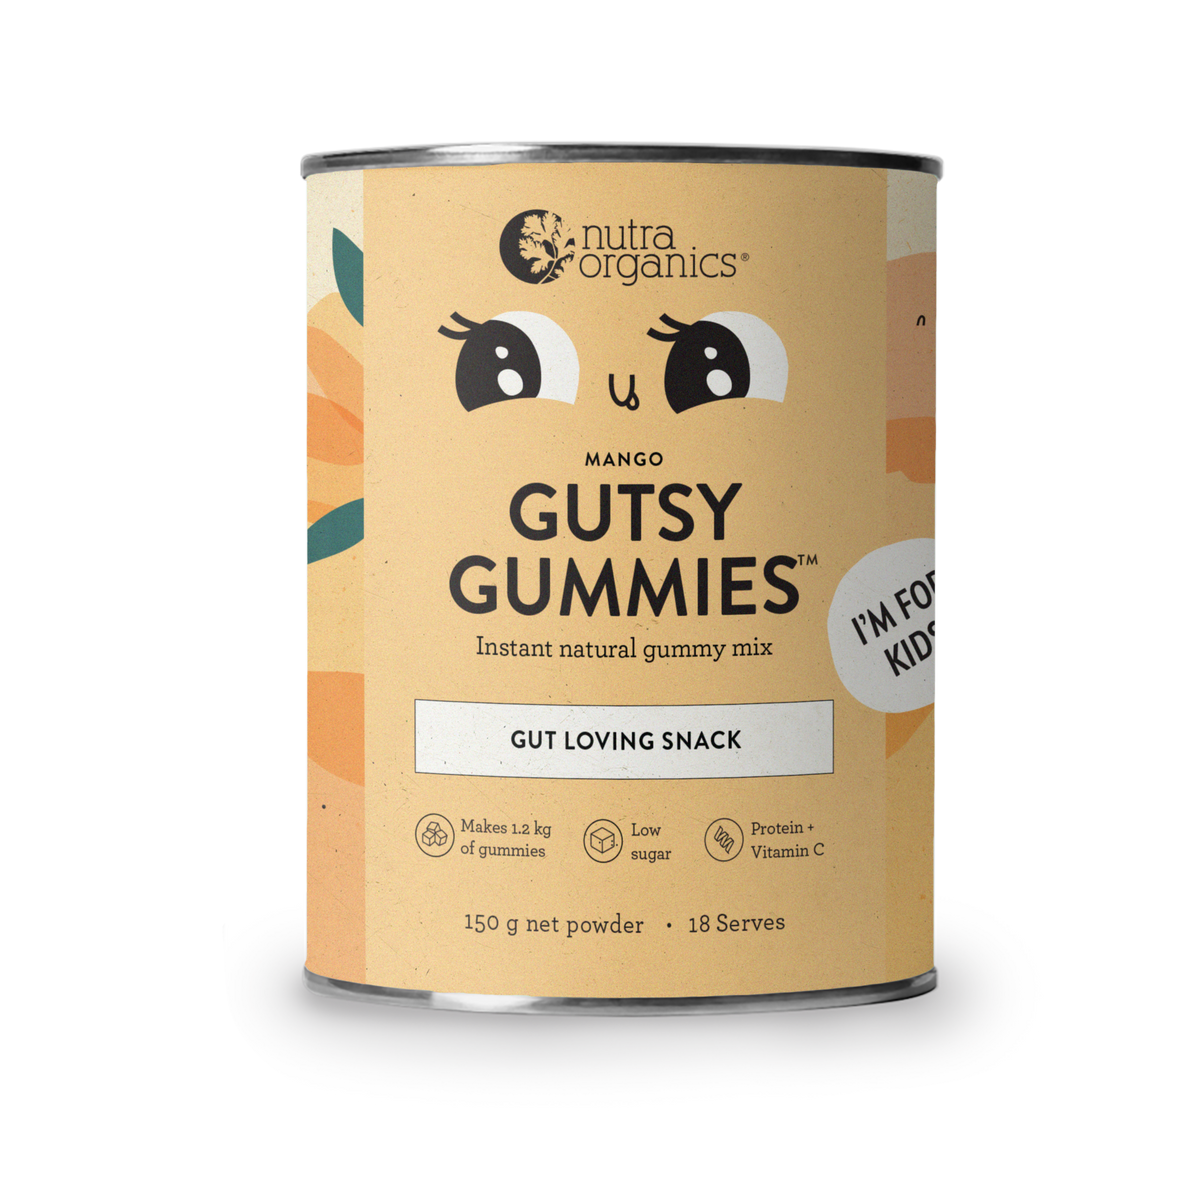 Nutra Organics Gutsy Gummies 150g - 3 flavors